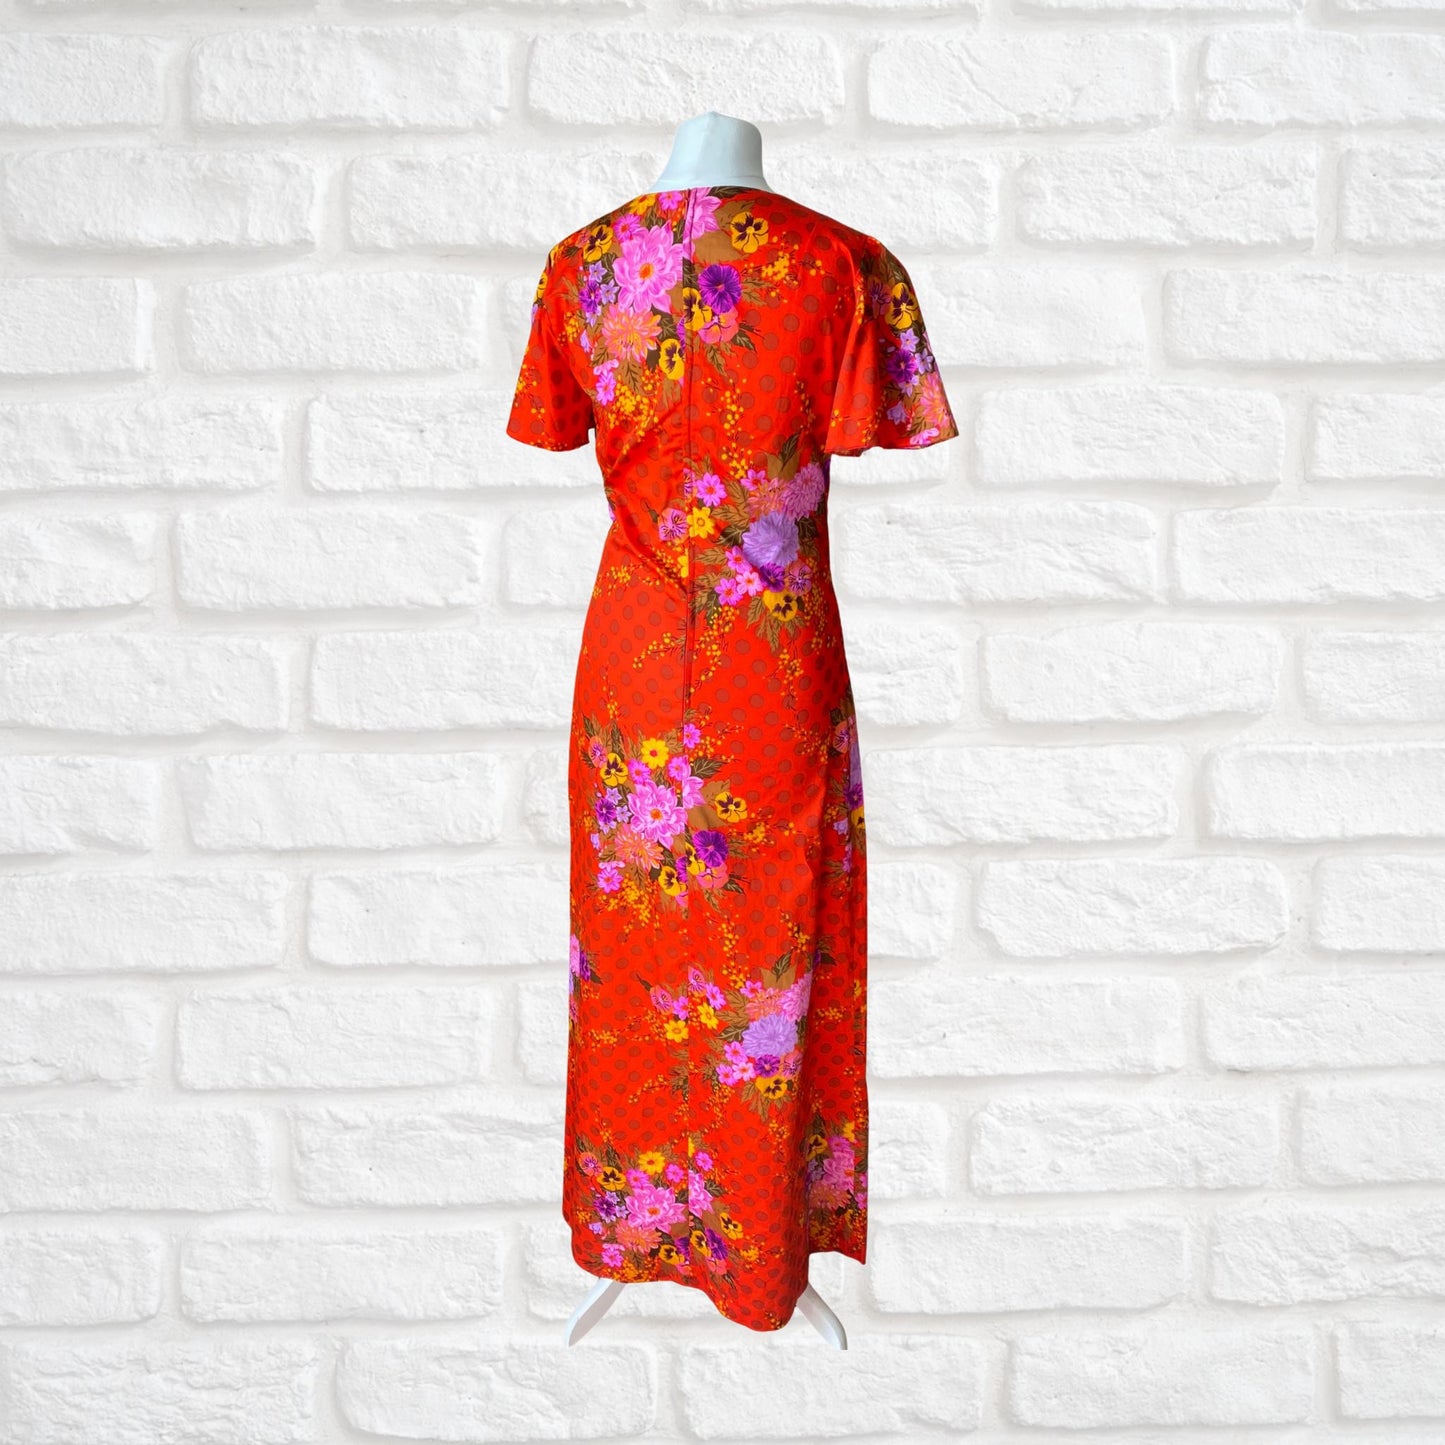 90s orange cotton floral maxi dress. Approx U.K. size 6-8